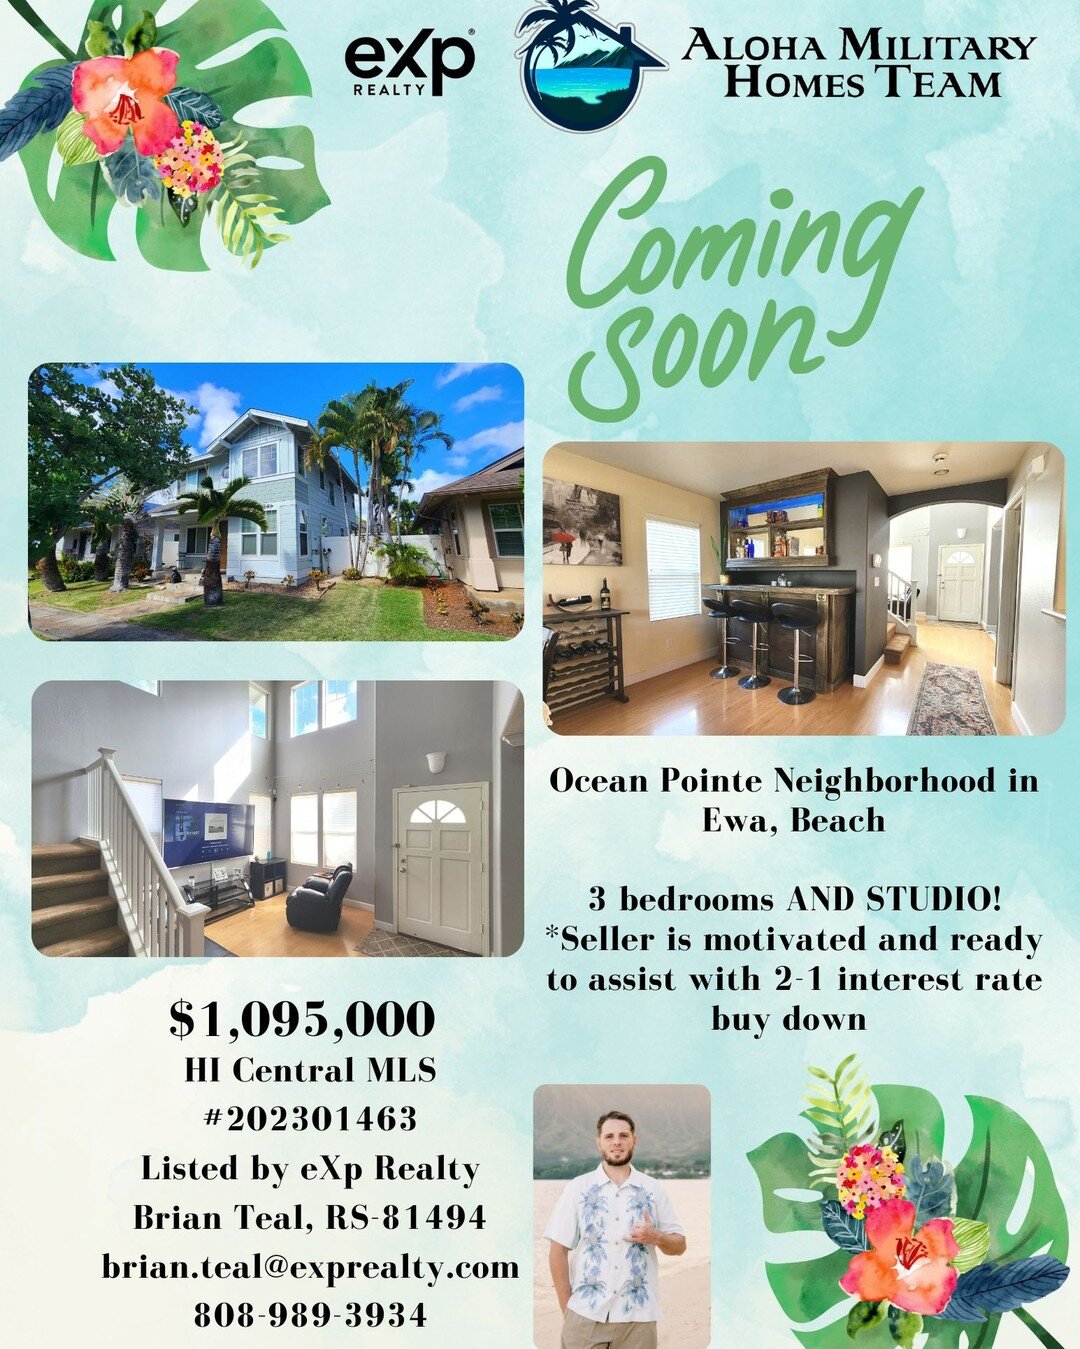 Coming Soon - new listing in Ocean Point neighborhood in Ewa Beach! Contact us for more information on this beautiful home! 

🏡 Aloha Military Homes Team, eXp Realty
🪪Brian Teal, RS-81494
808-989-3934

#hawaiihomes #hawaii #militarylife #HawaiiReal